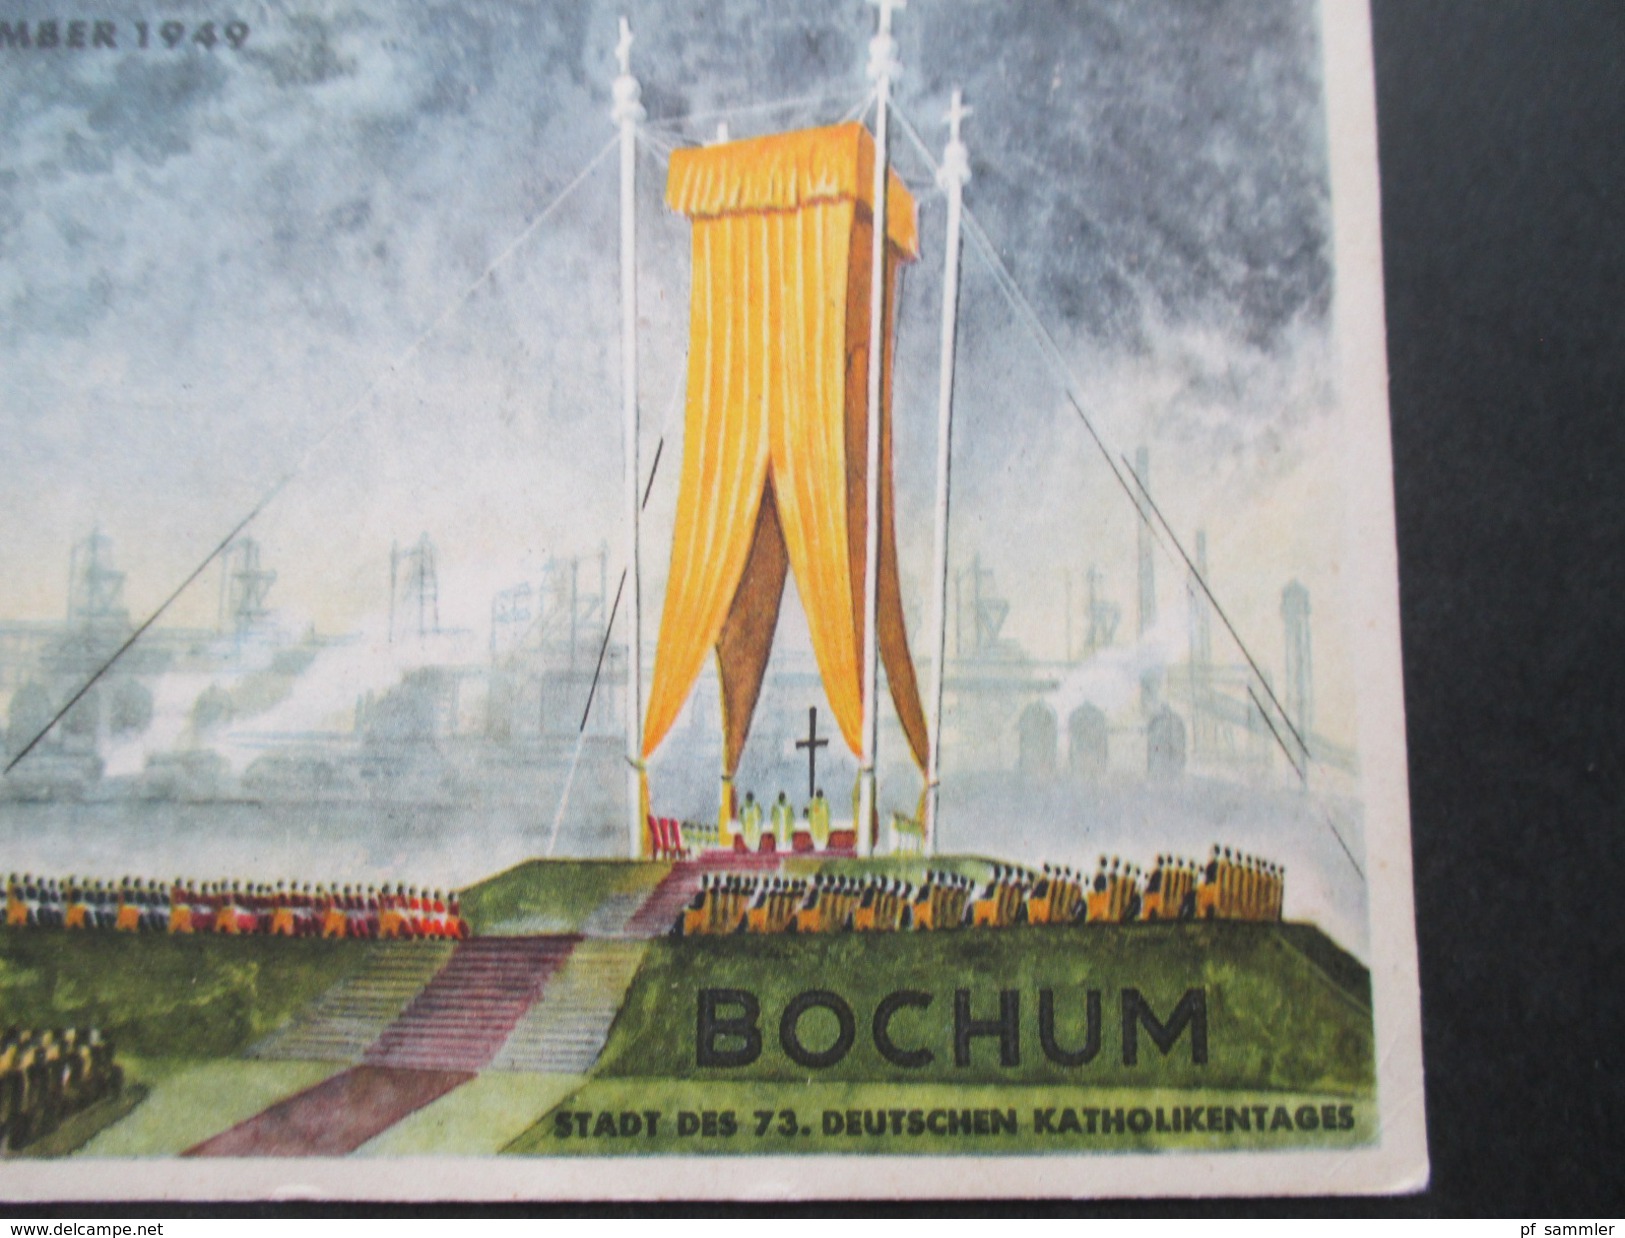 AK / Künstlerkarte Bochum Stadt Des 73. Deutschen Katholikentages. 1. - 4. September. 1949 Aquarell Kurt Hubert Vieth. - Cristianismo